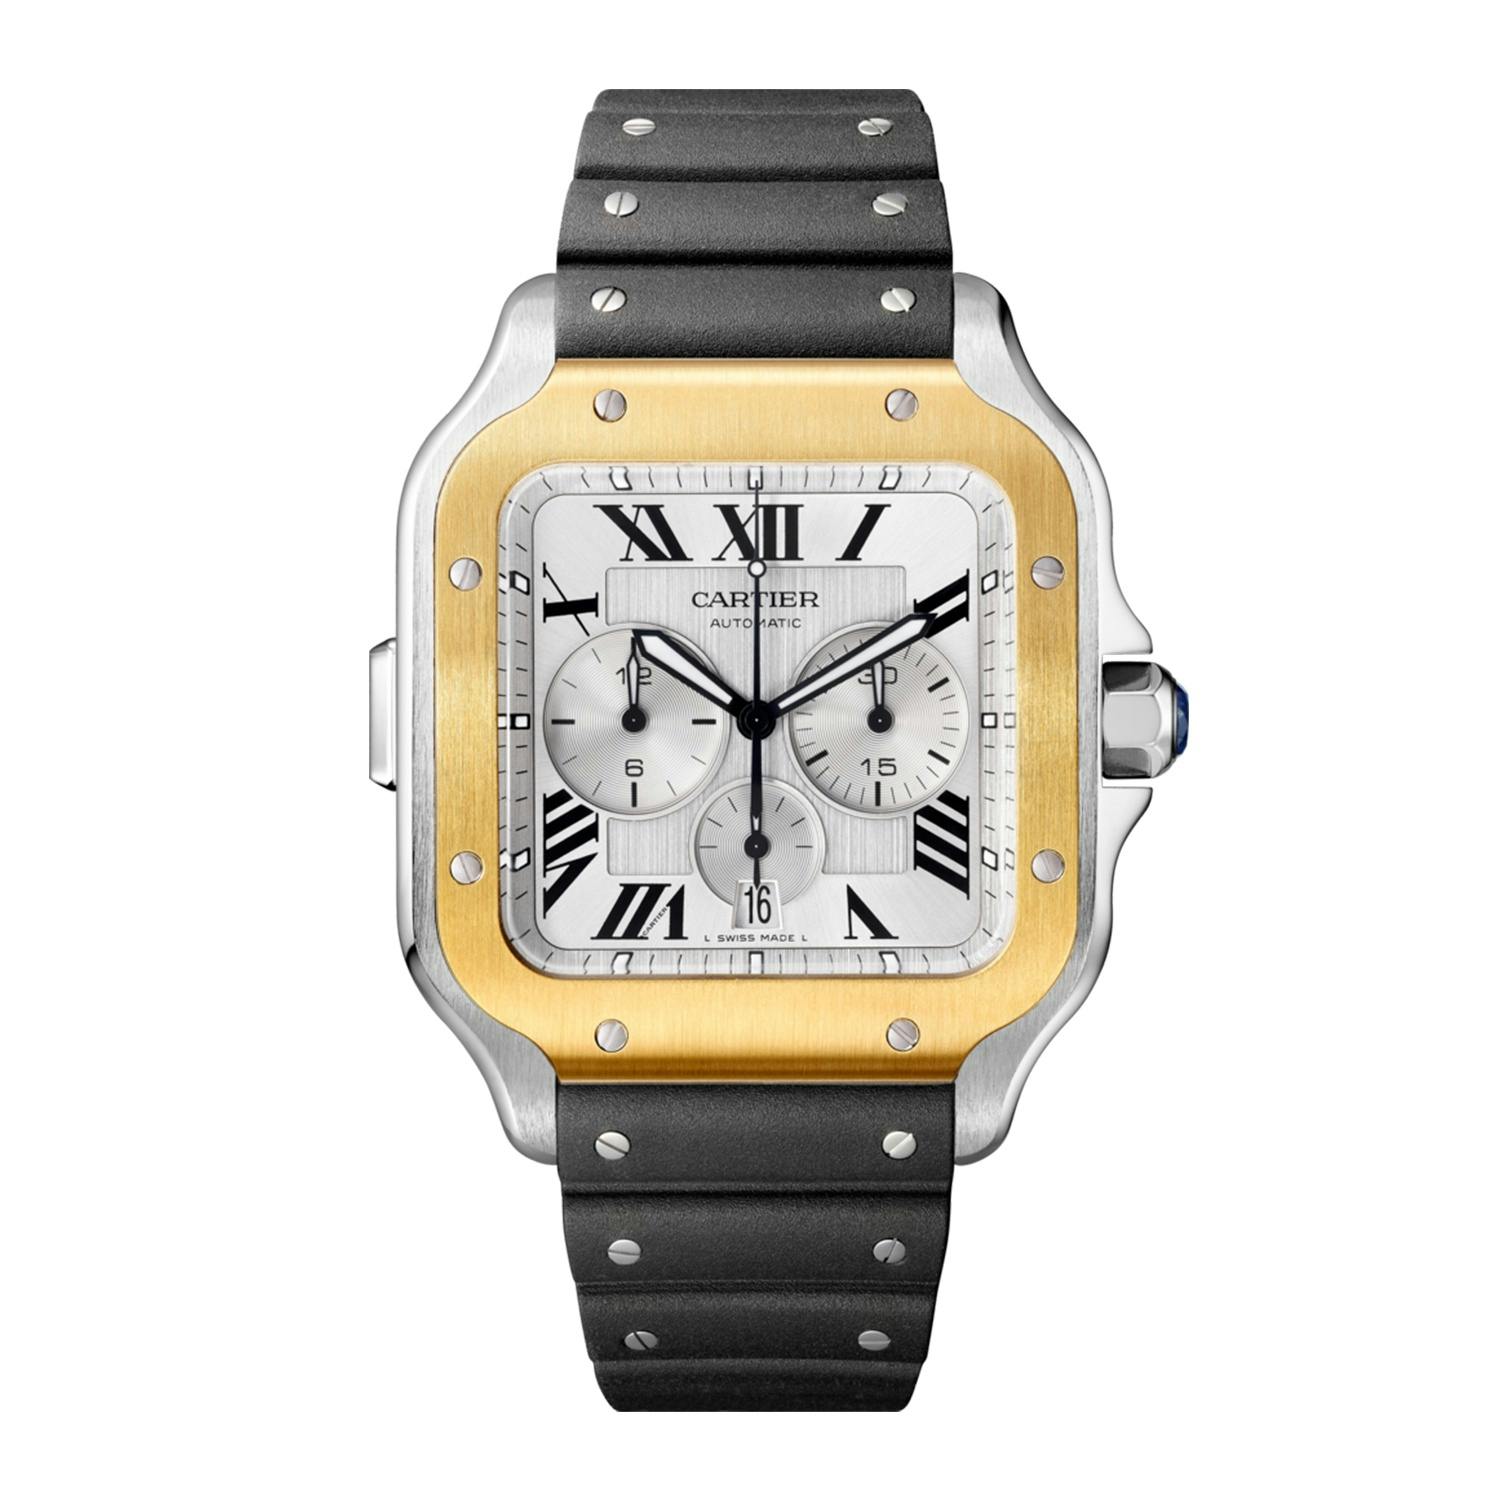 Santos de Cartier Chronograph watch